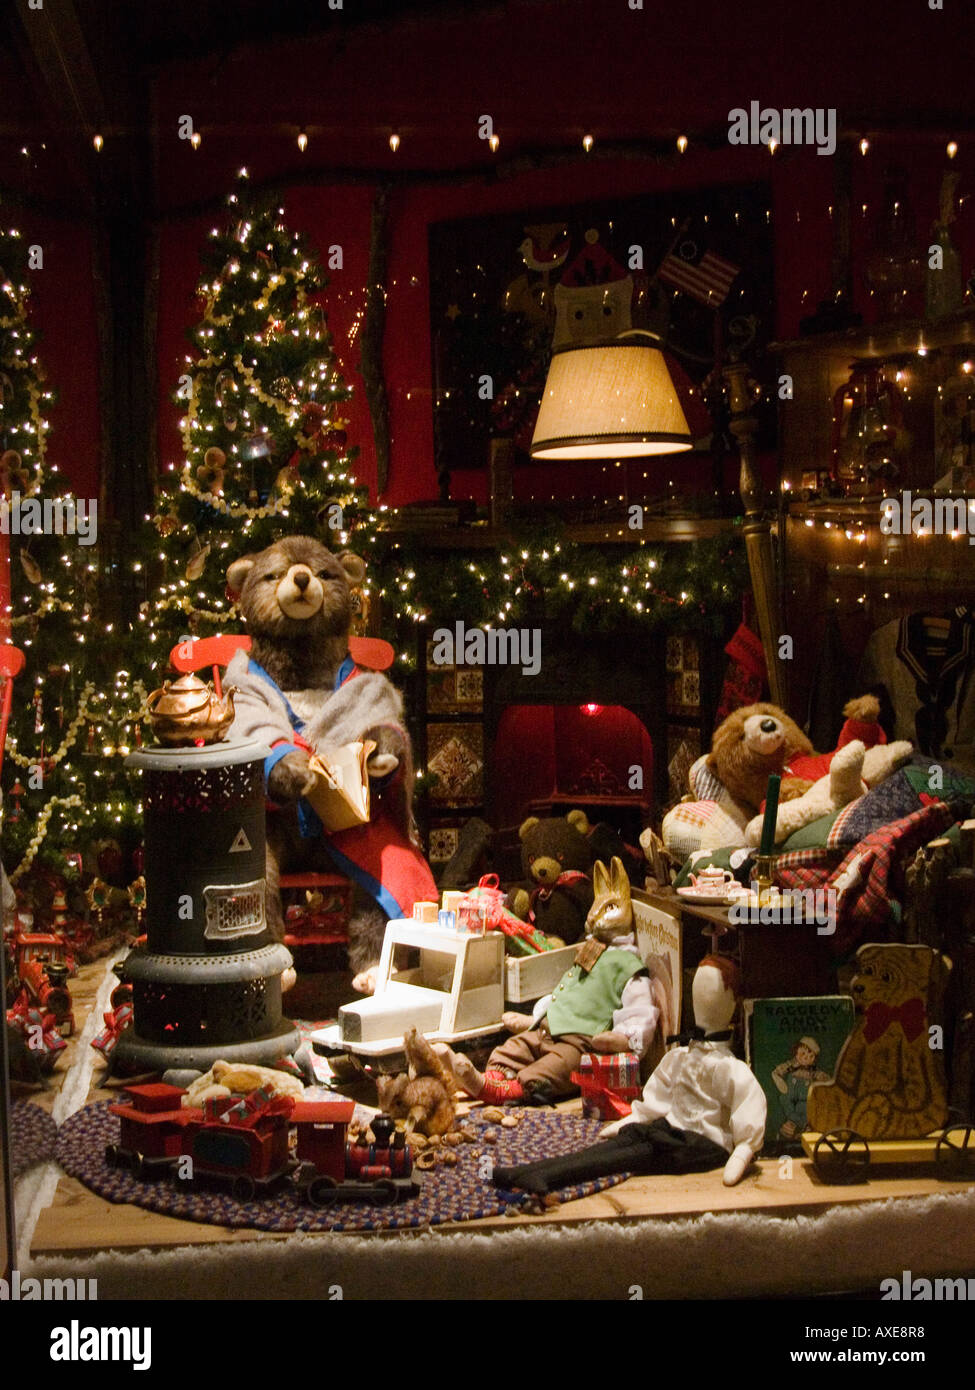 28,881 Shop Windows Christmas Images, Stock Photos, 3D objects, & Vectors